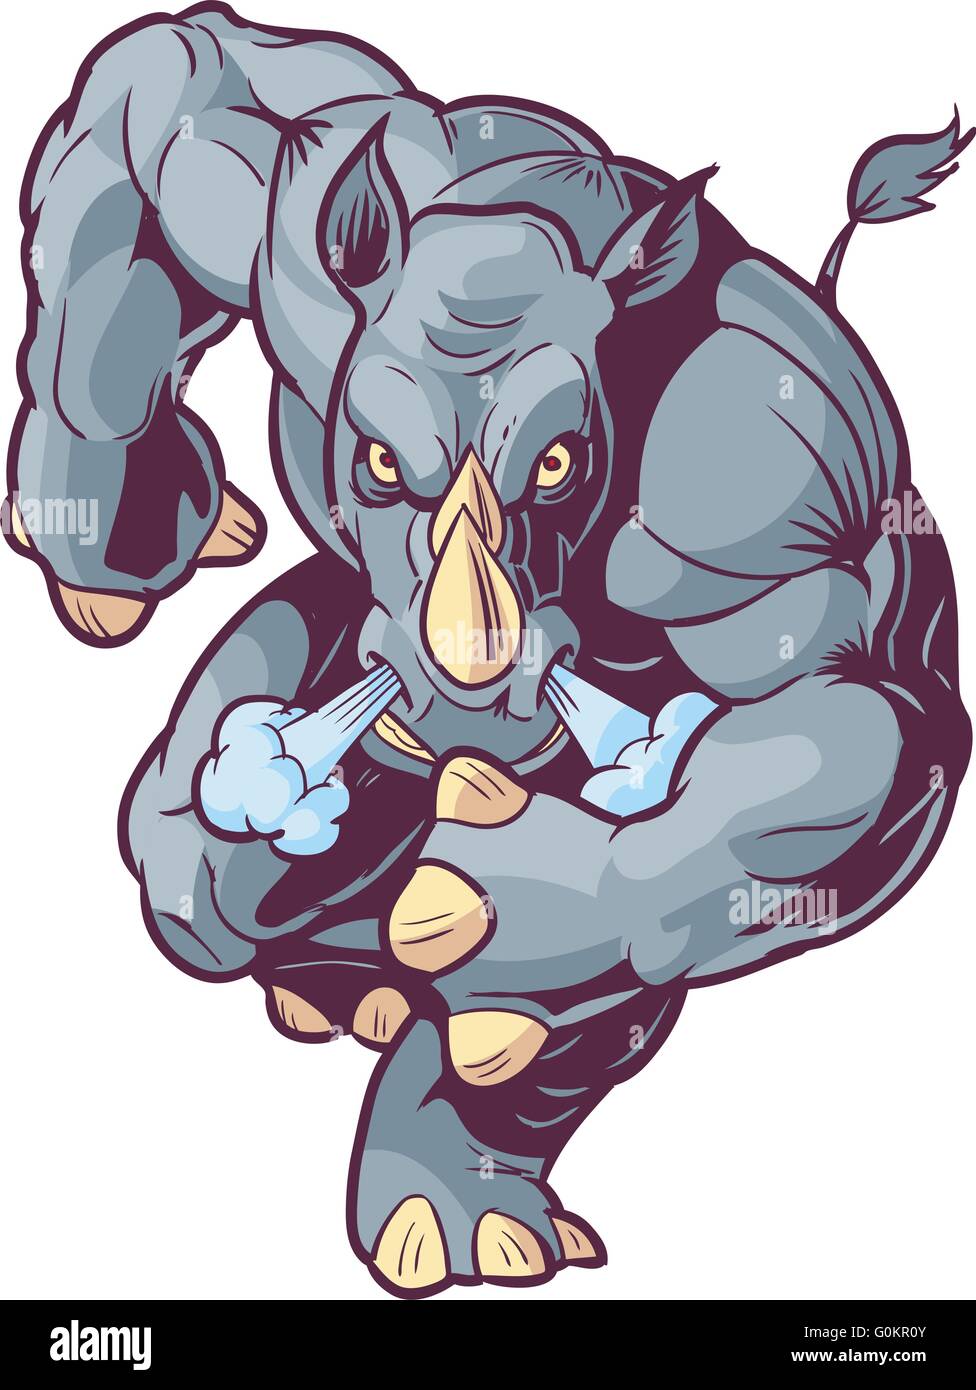 Vector Cartoon Clip Art Illustration of an Anthropomorphic Mascot Rhino or Rhinoceros Charging Forward Stock Vector